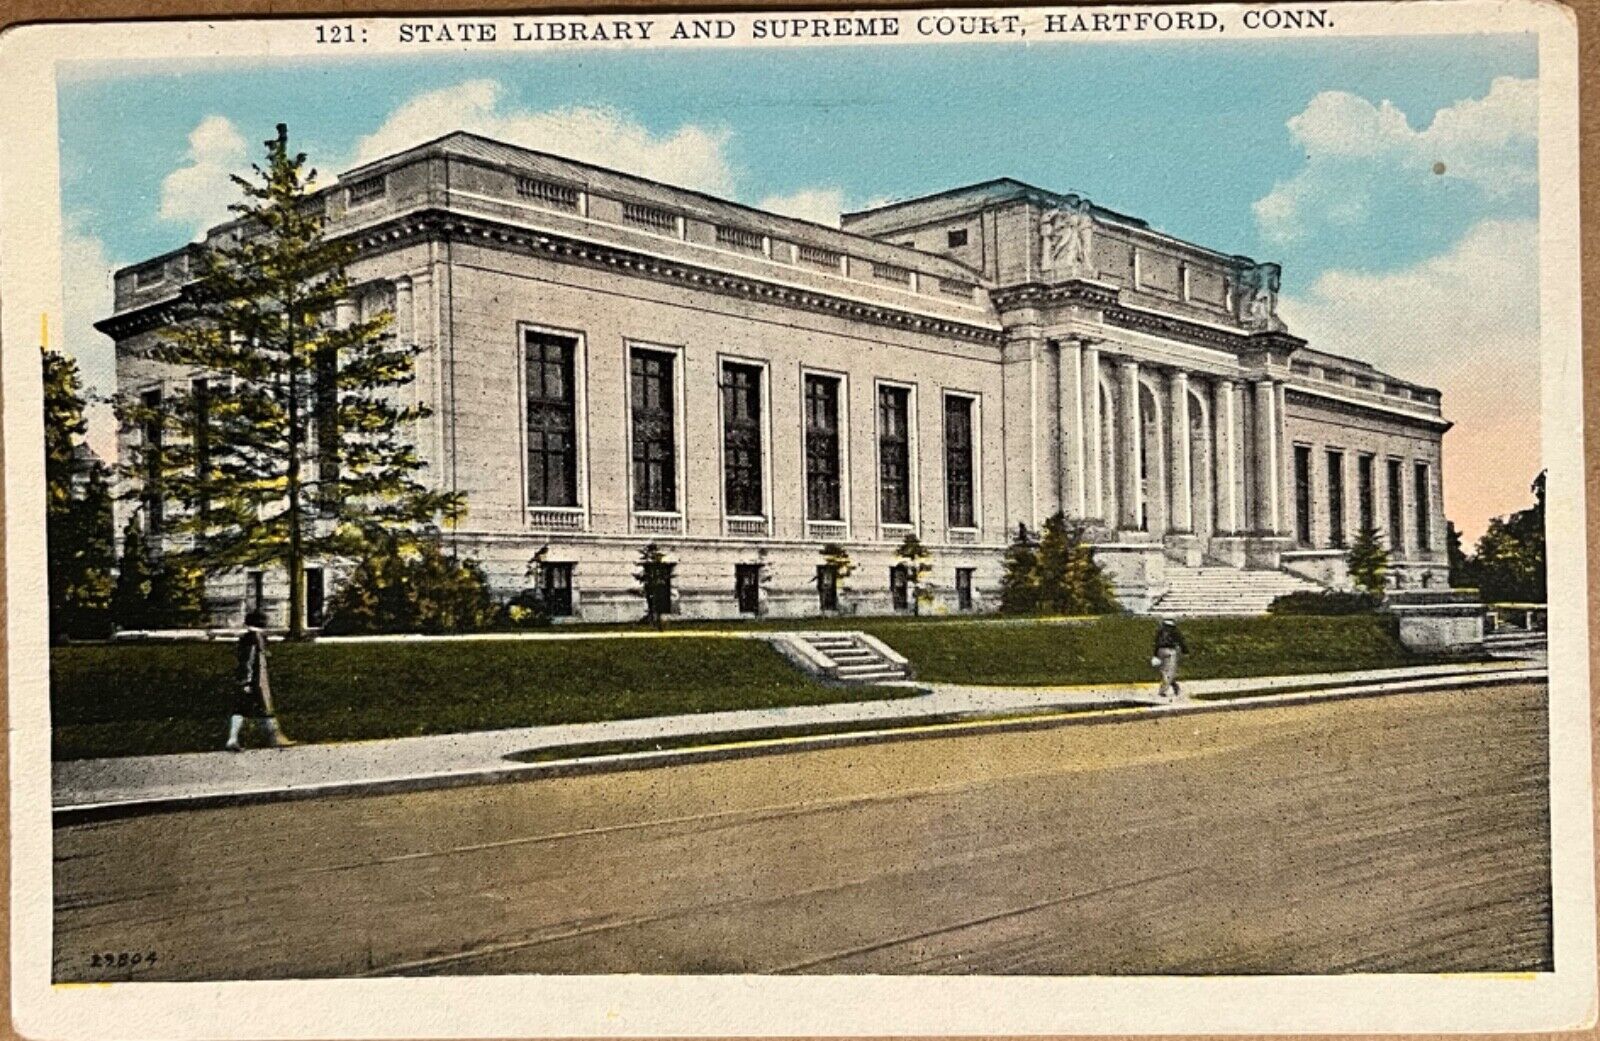 Hartford Conneticut Supreme Court Library People Walking Vintage Postcard c1920